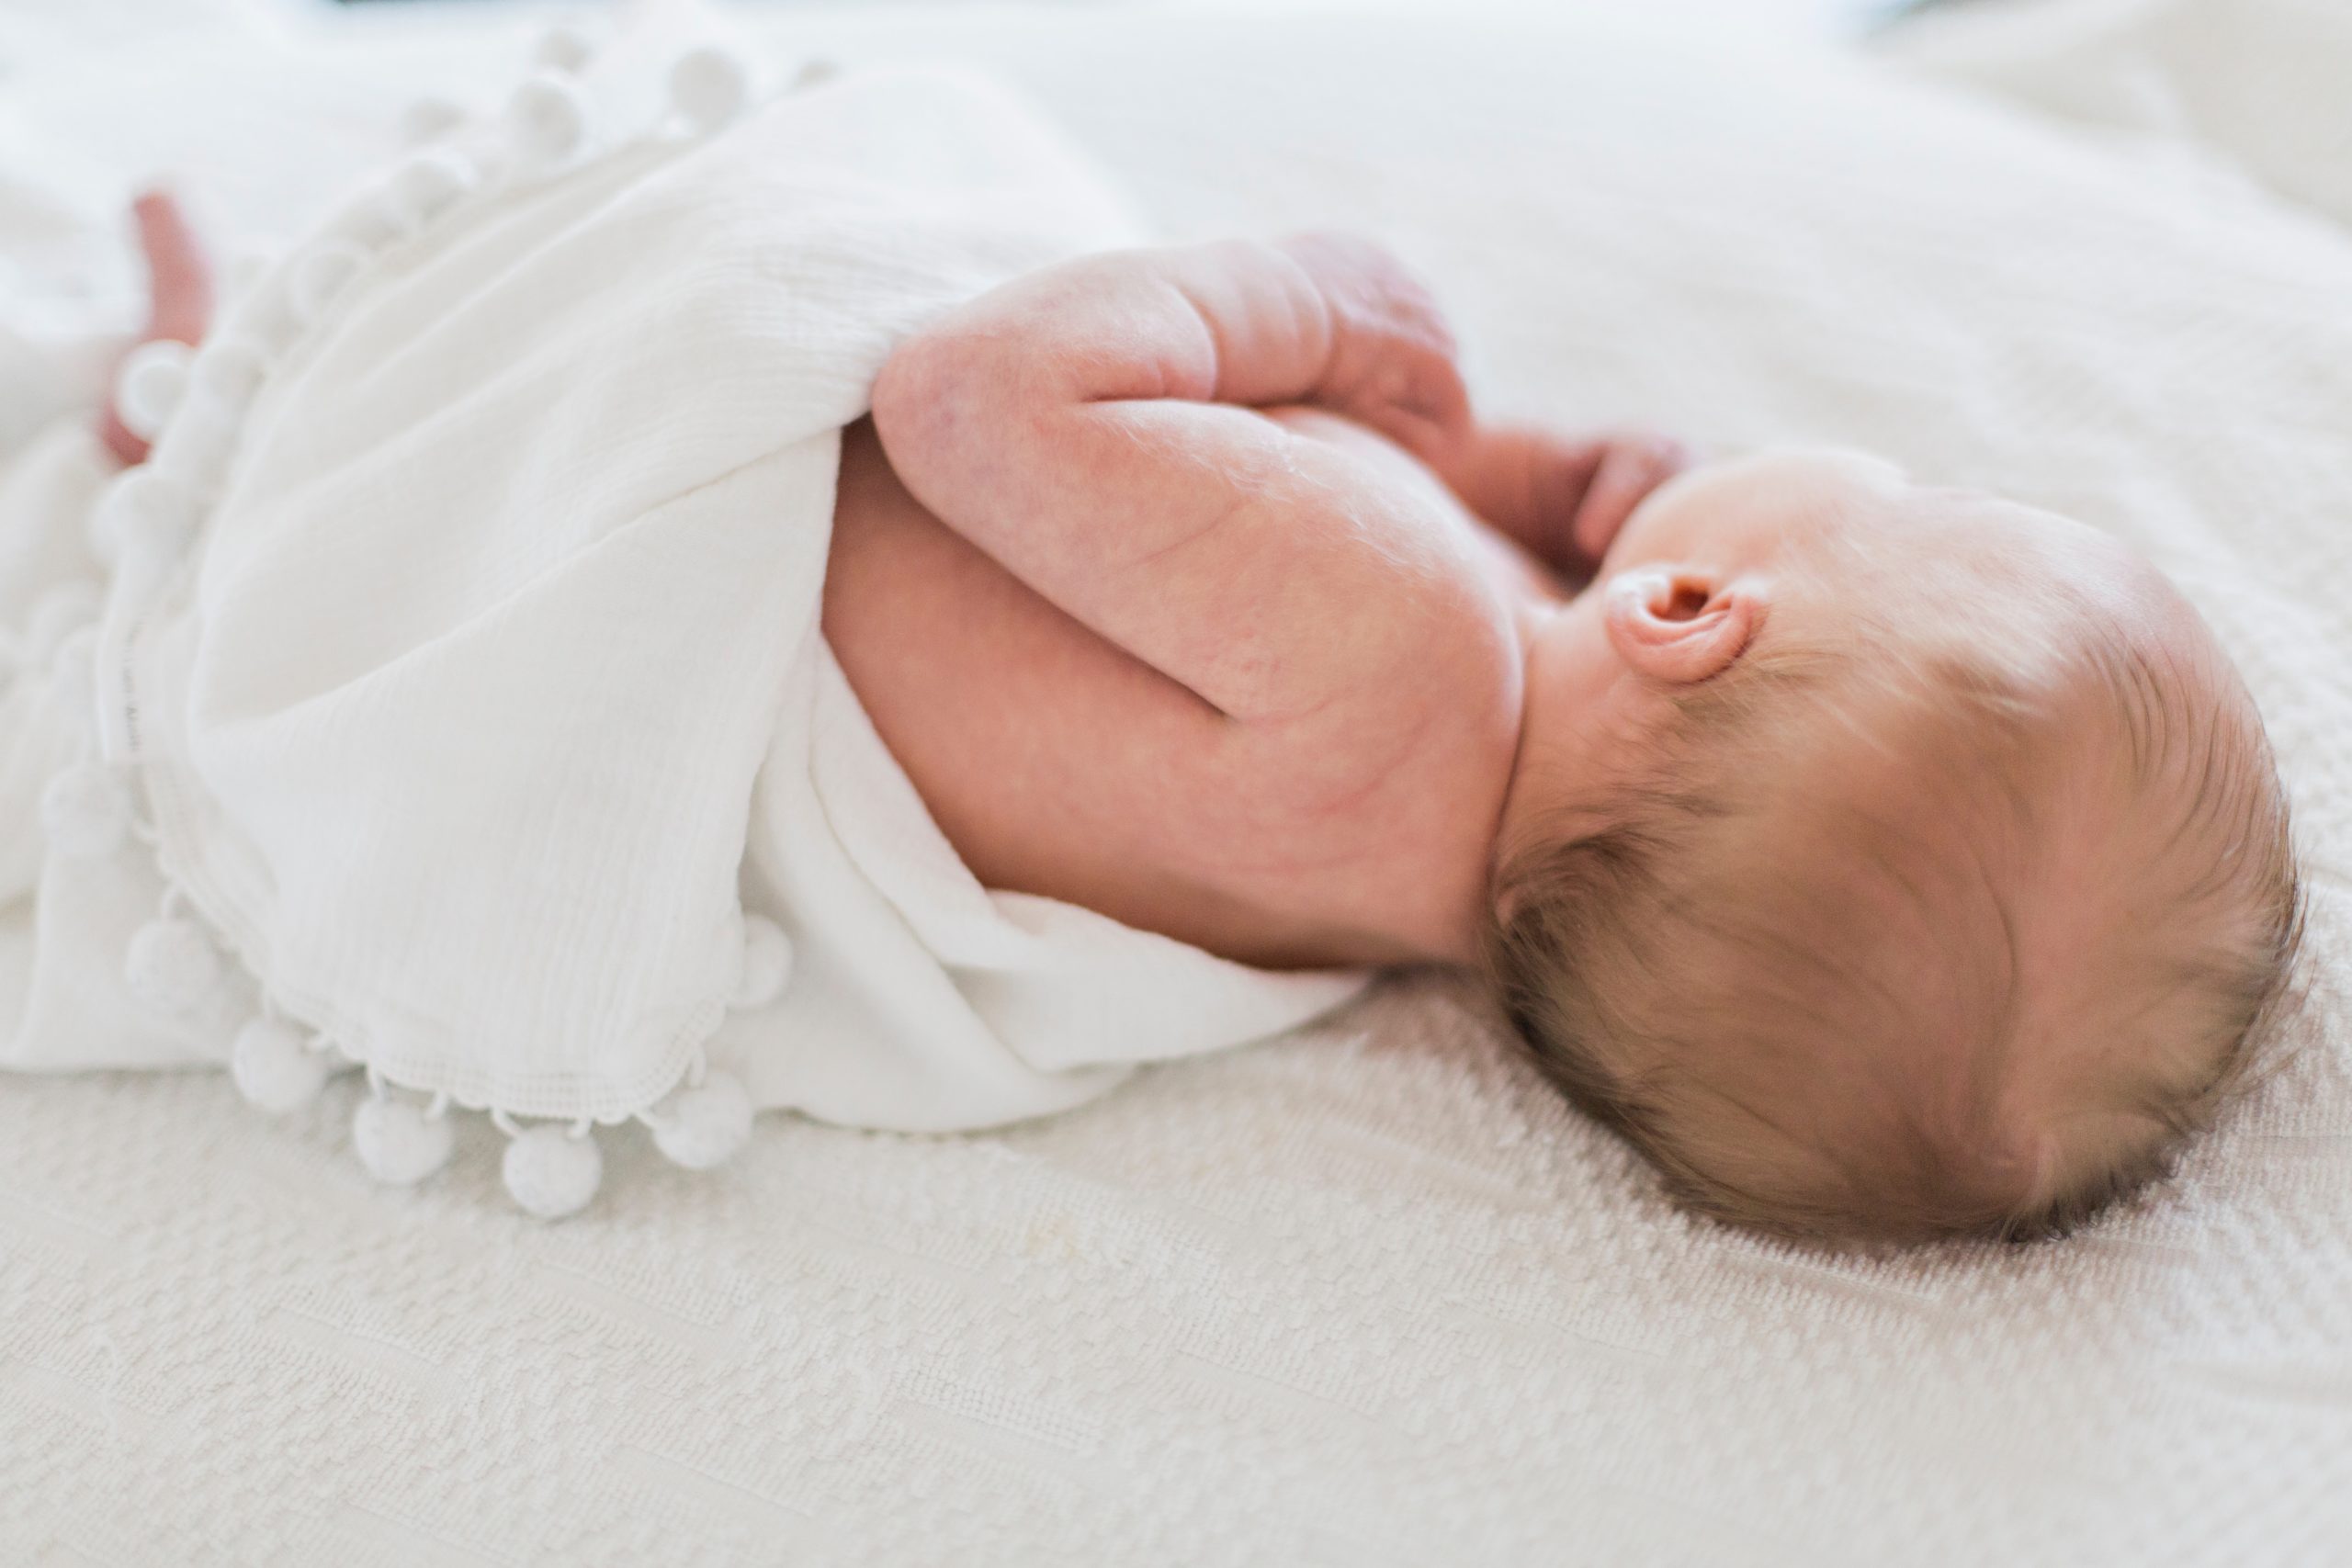 Understanding Baby Sleep Patterns